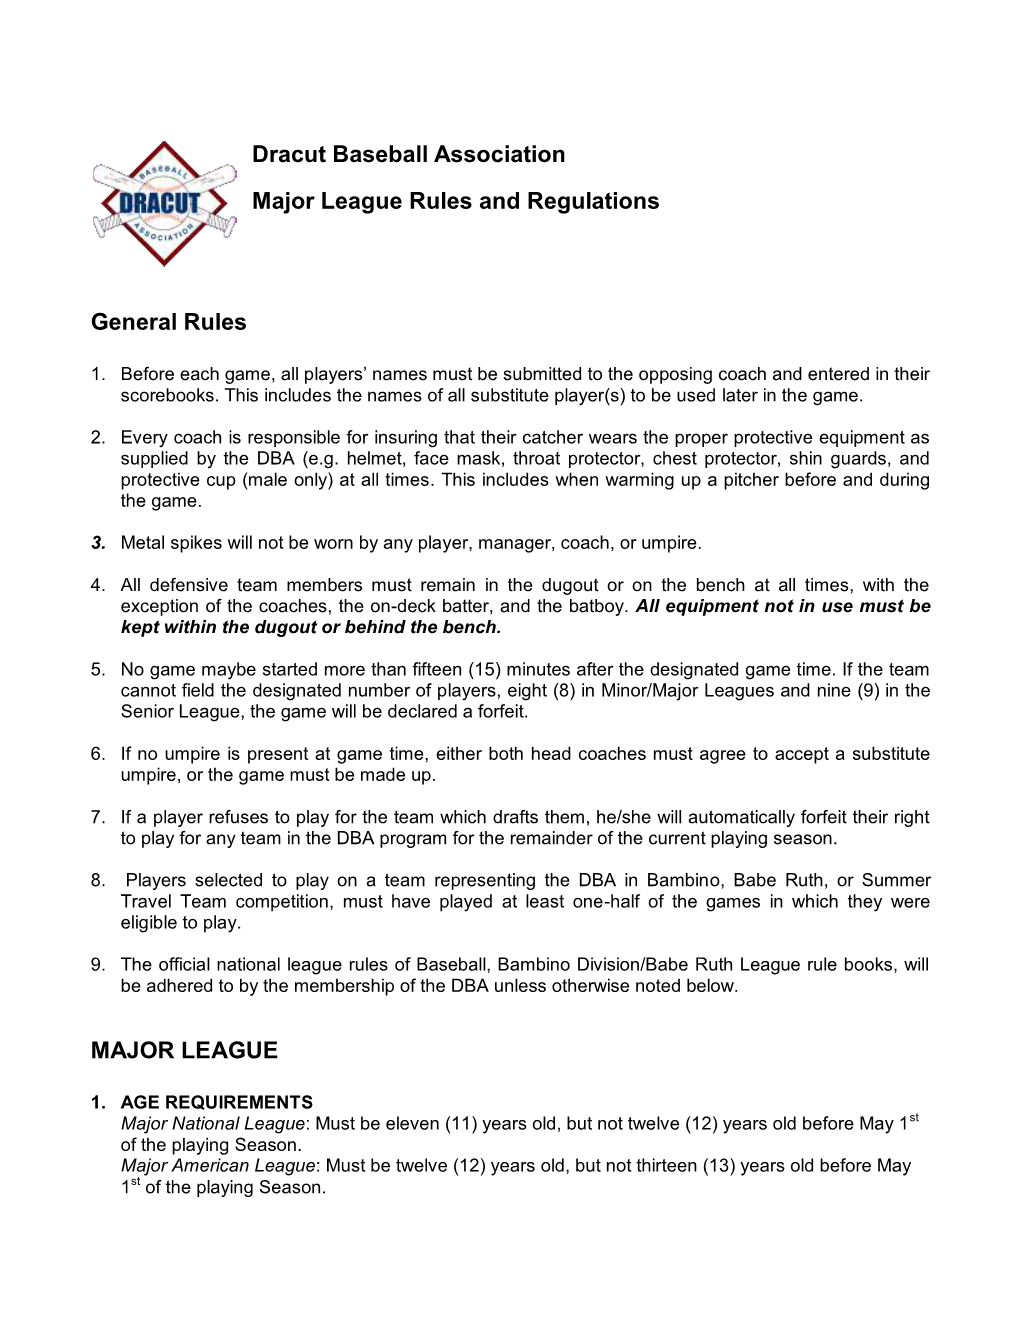 Dracut Baseball Association Major League Rules and Regulations